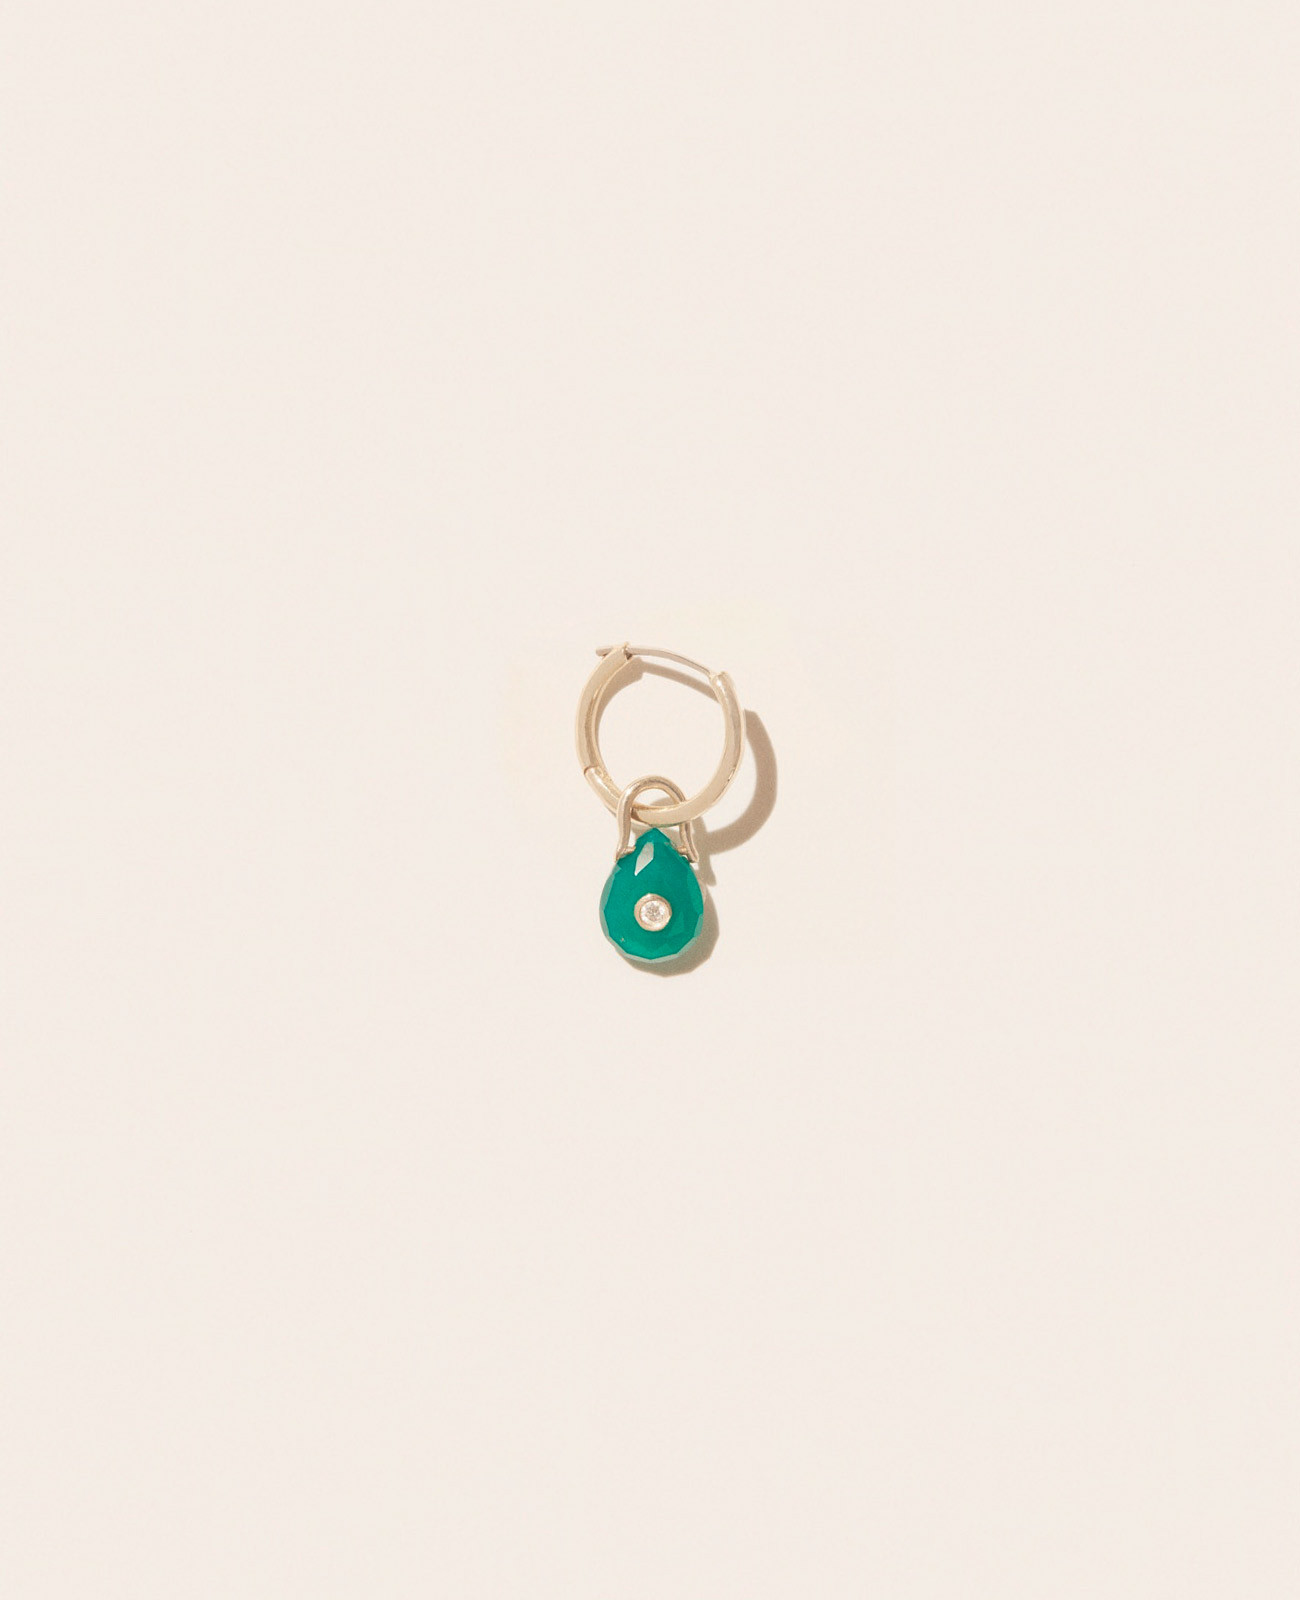 ORSO GREEN ONYX earring pascale monvoisin jewelry paris